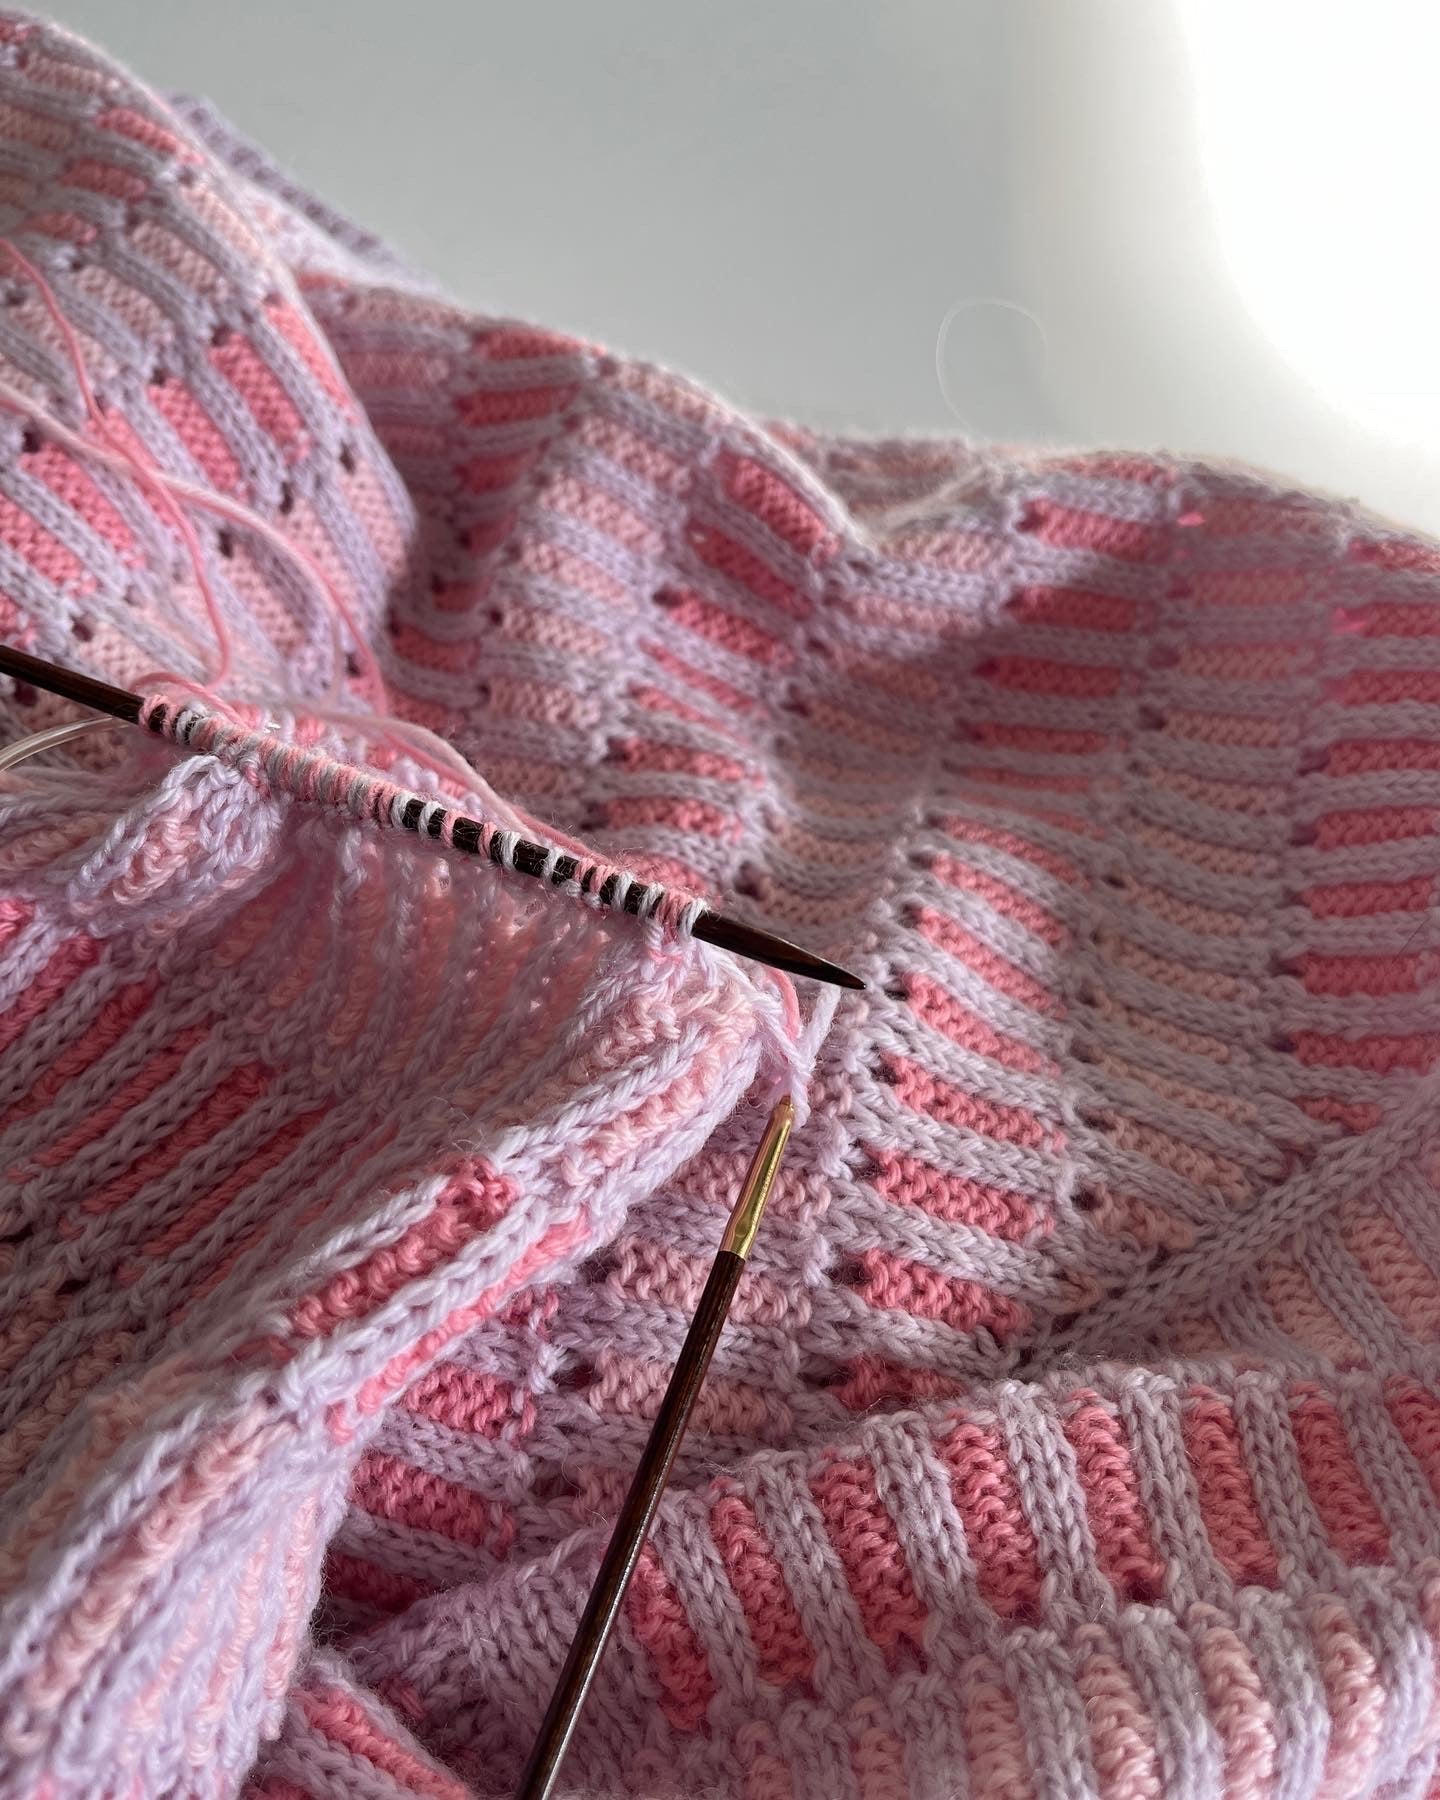 Stairway To Heaven Sweater English Popknit knitting pattern